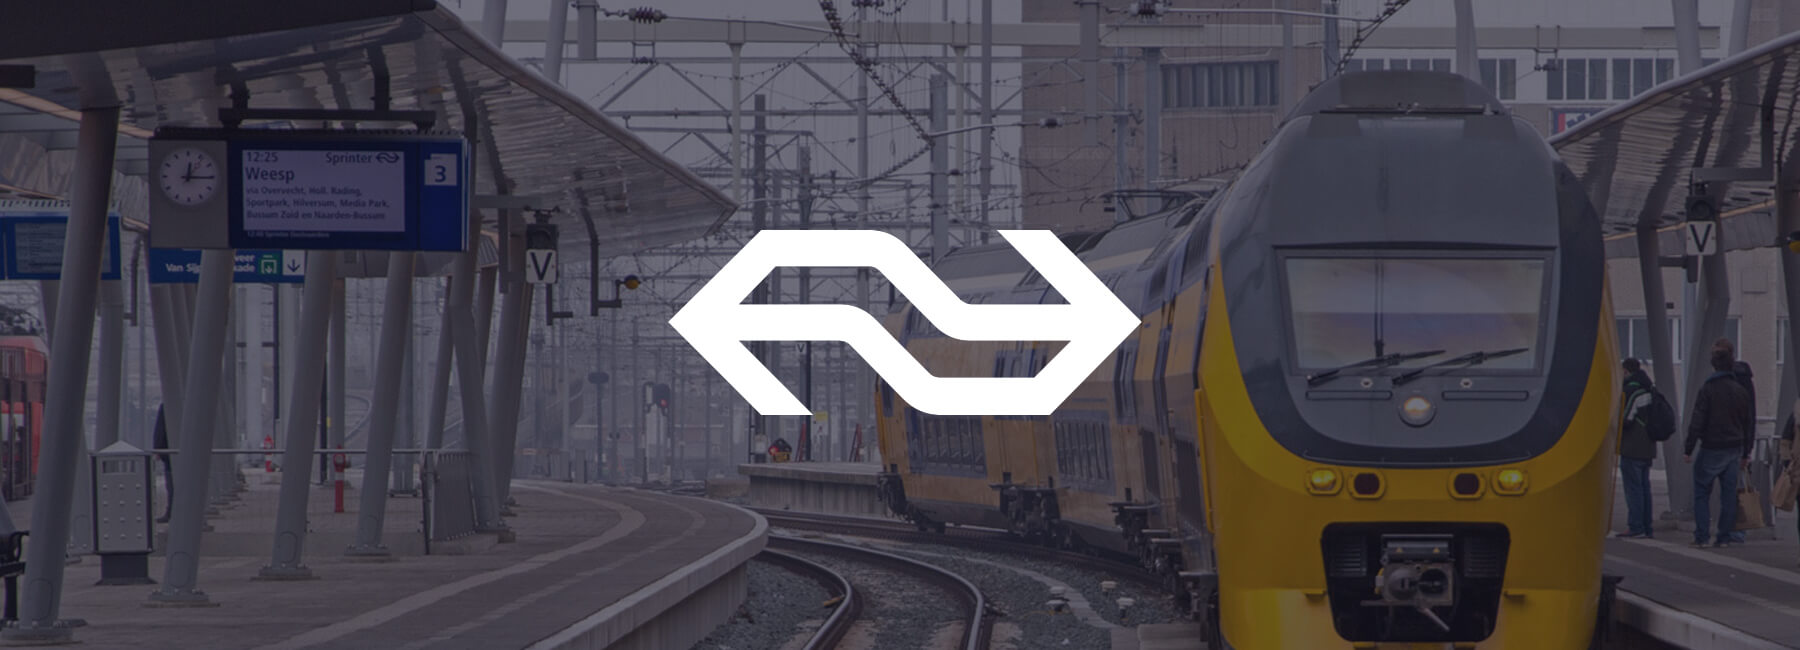 NS (Dutch Rail): Improving online conversions